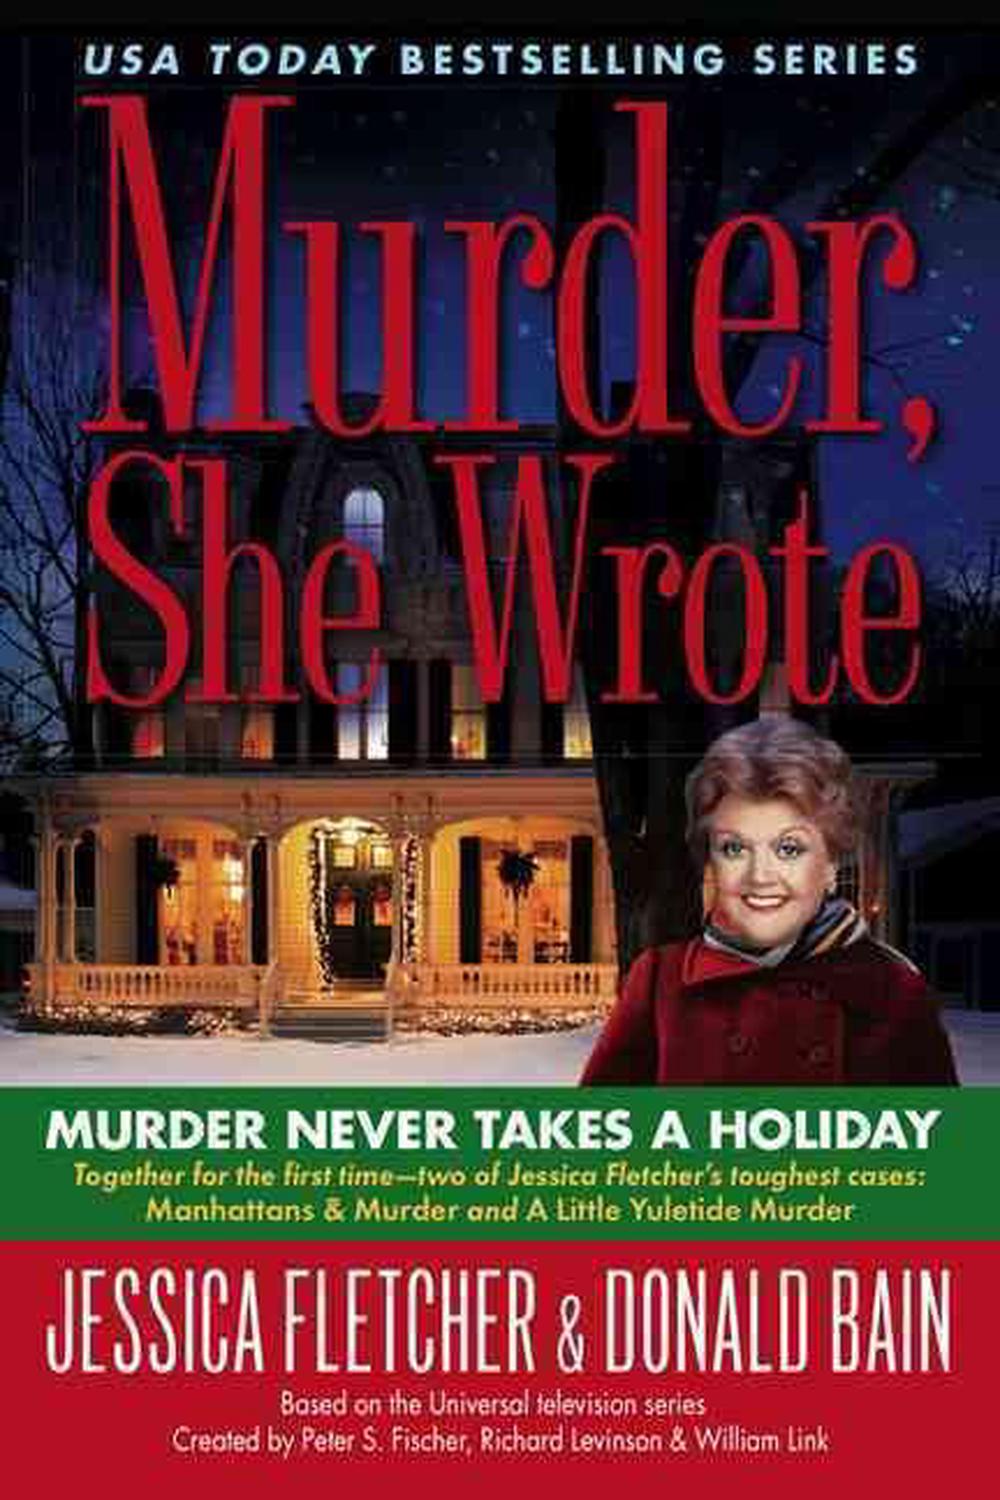 She take a holiday. Book of Murder. Murder she wrote.